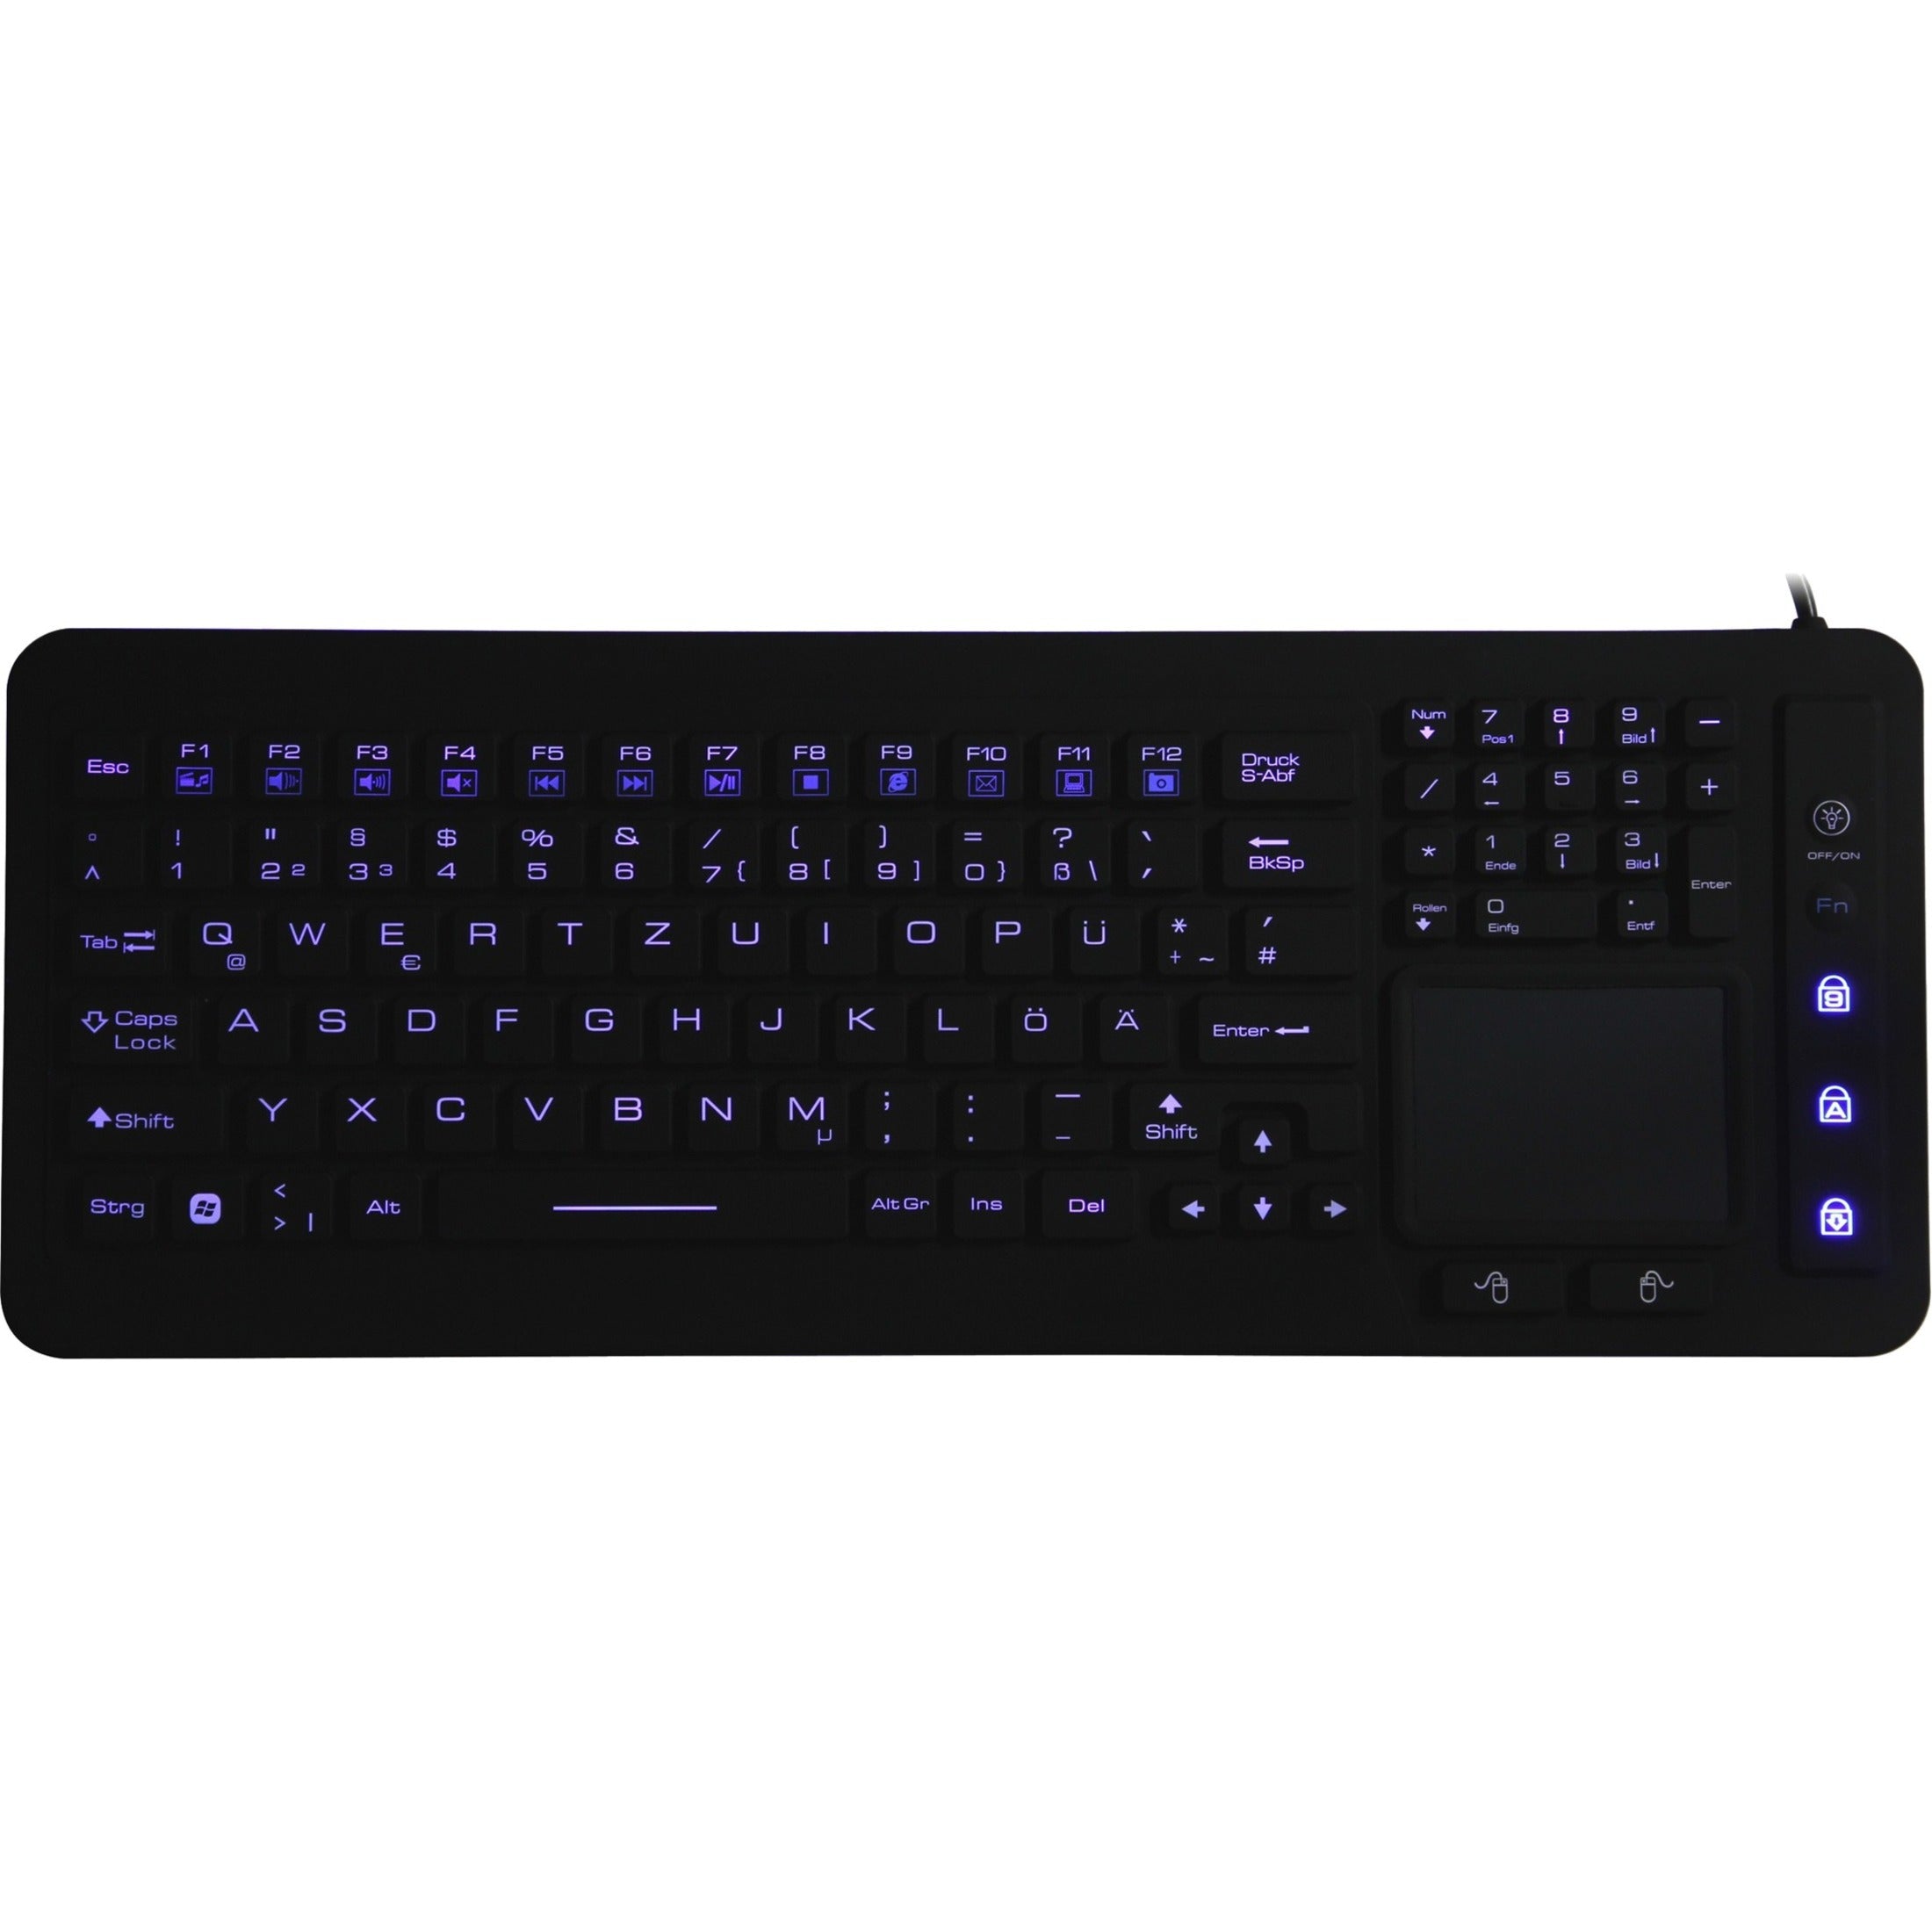 DSI KB-JH-IKB98BL Industrial Silicone Full Size LED Backlit Keyboard, USB Interface, 98 Key, TouchPad, Windows, Black